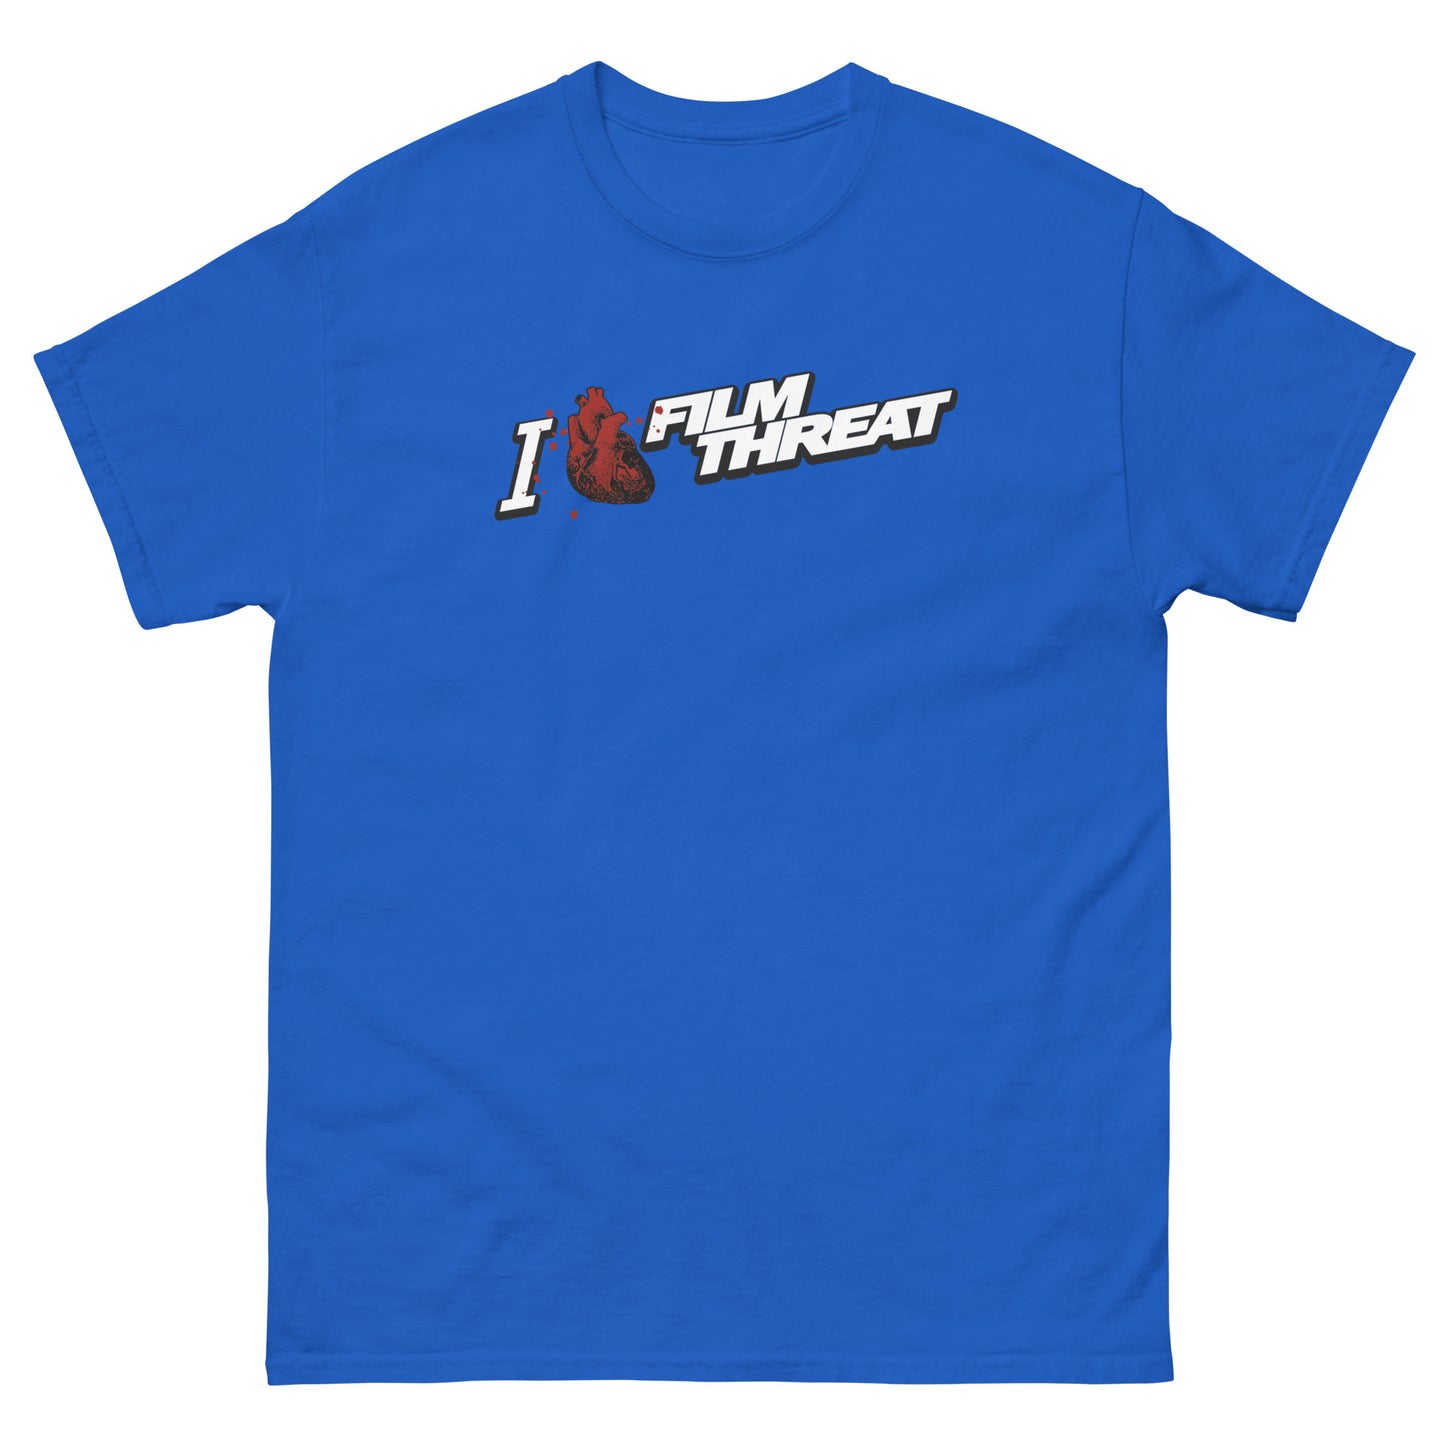 I Heart Film Threat Unisex T-Shirt